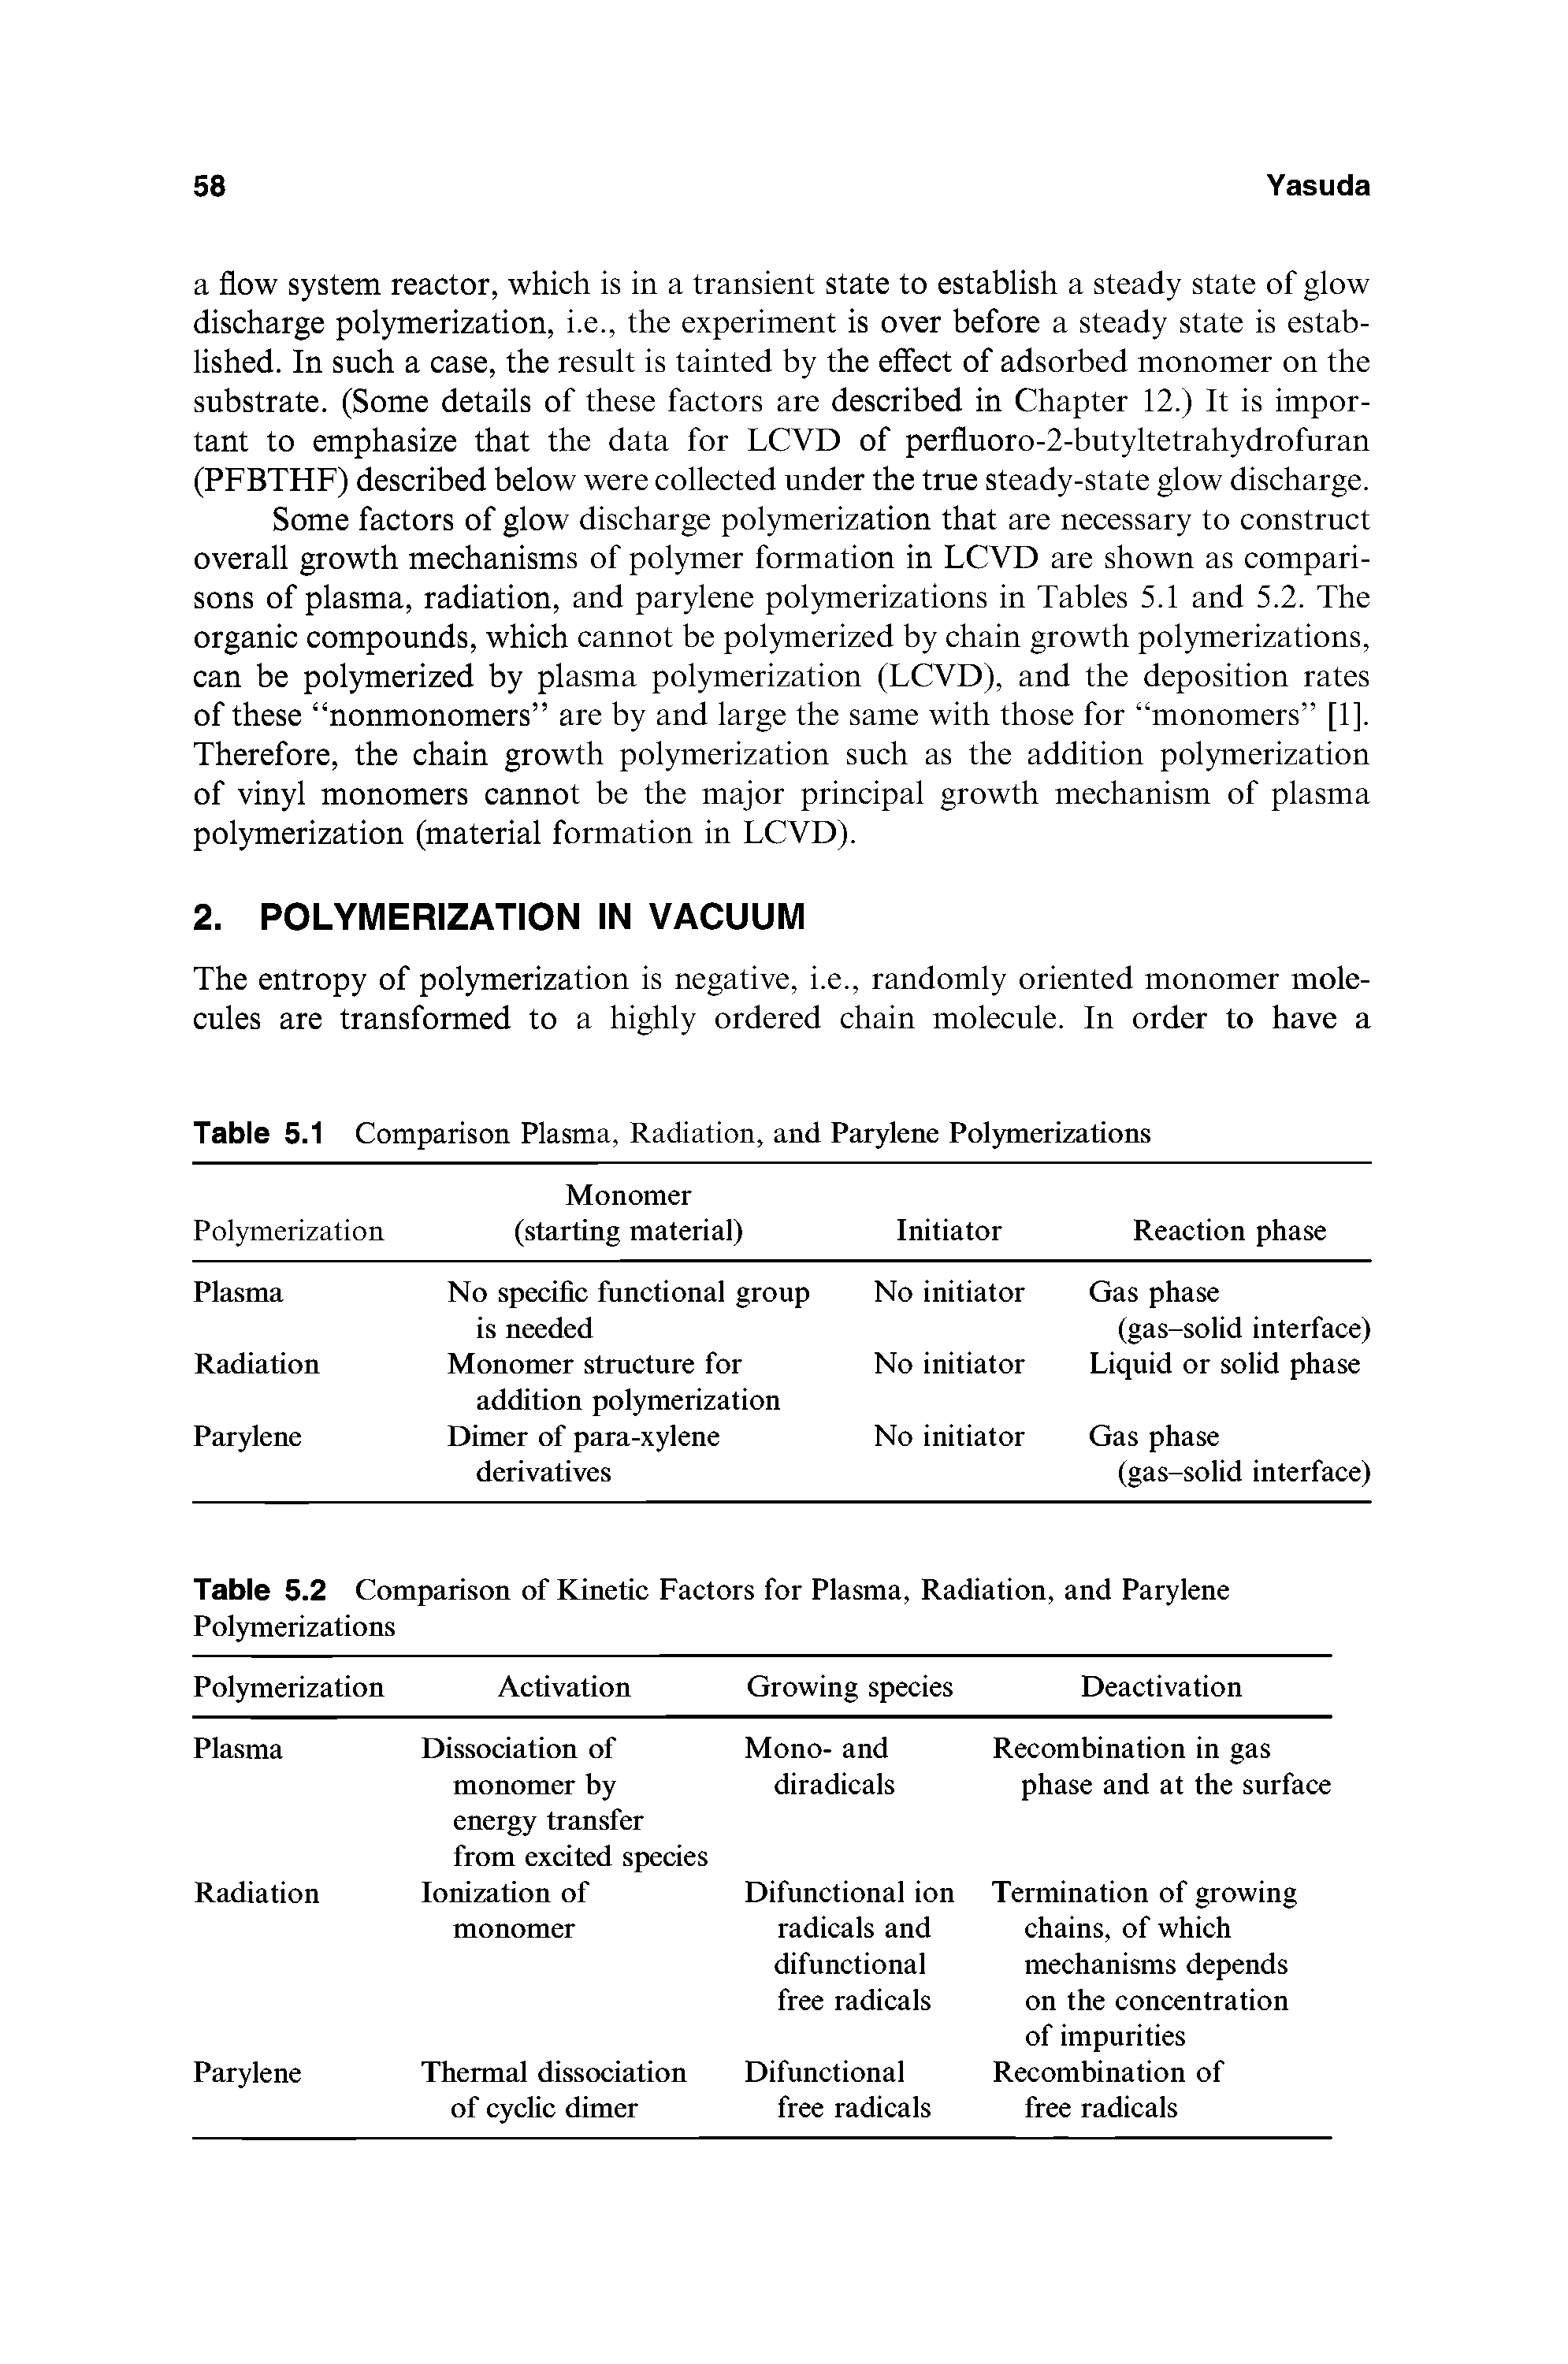 Table 5.1 Comparison Plasma, Radiation, and Parylene Pol5merizations...